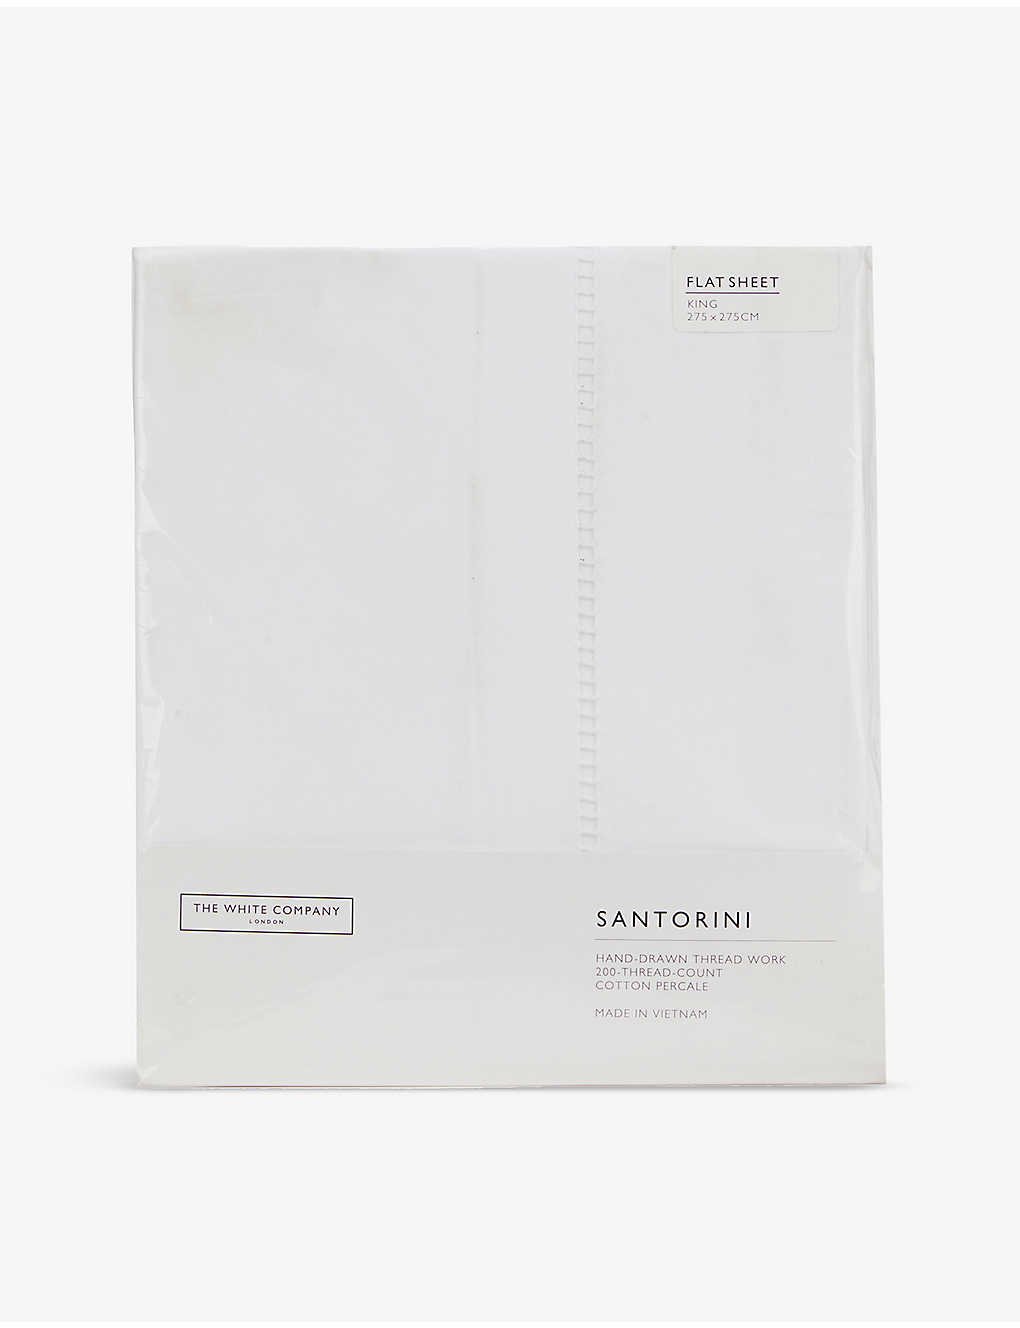 The White Company White Santorini Cotton King Size Flat Sheet 275cm X 275cm King